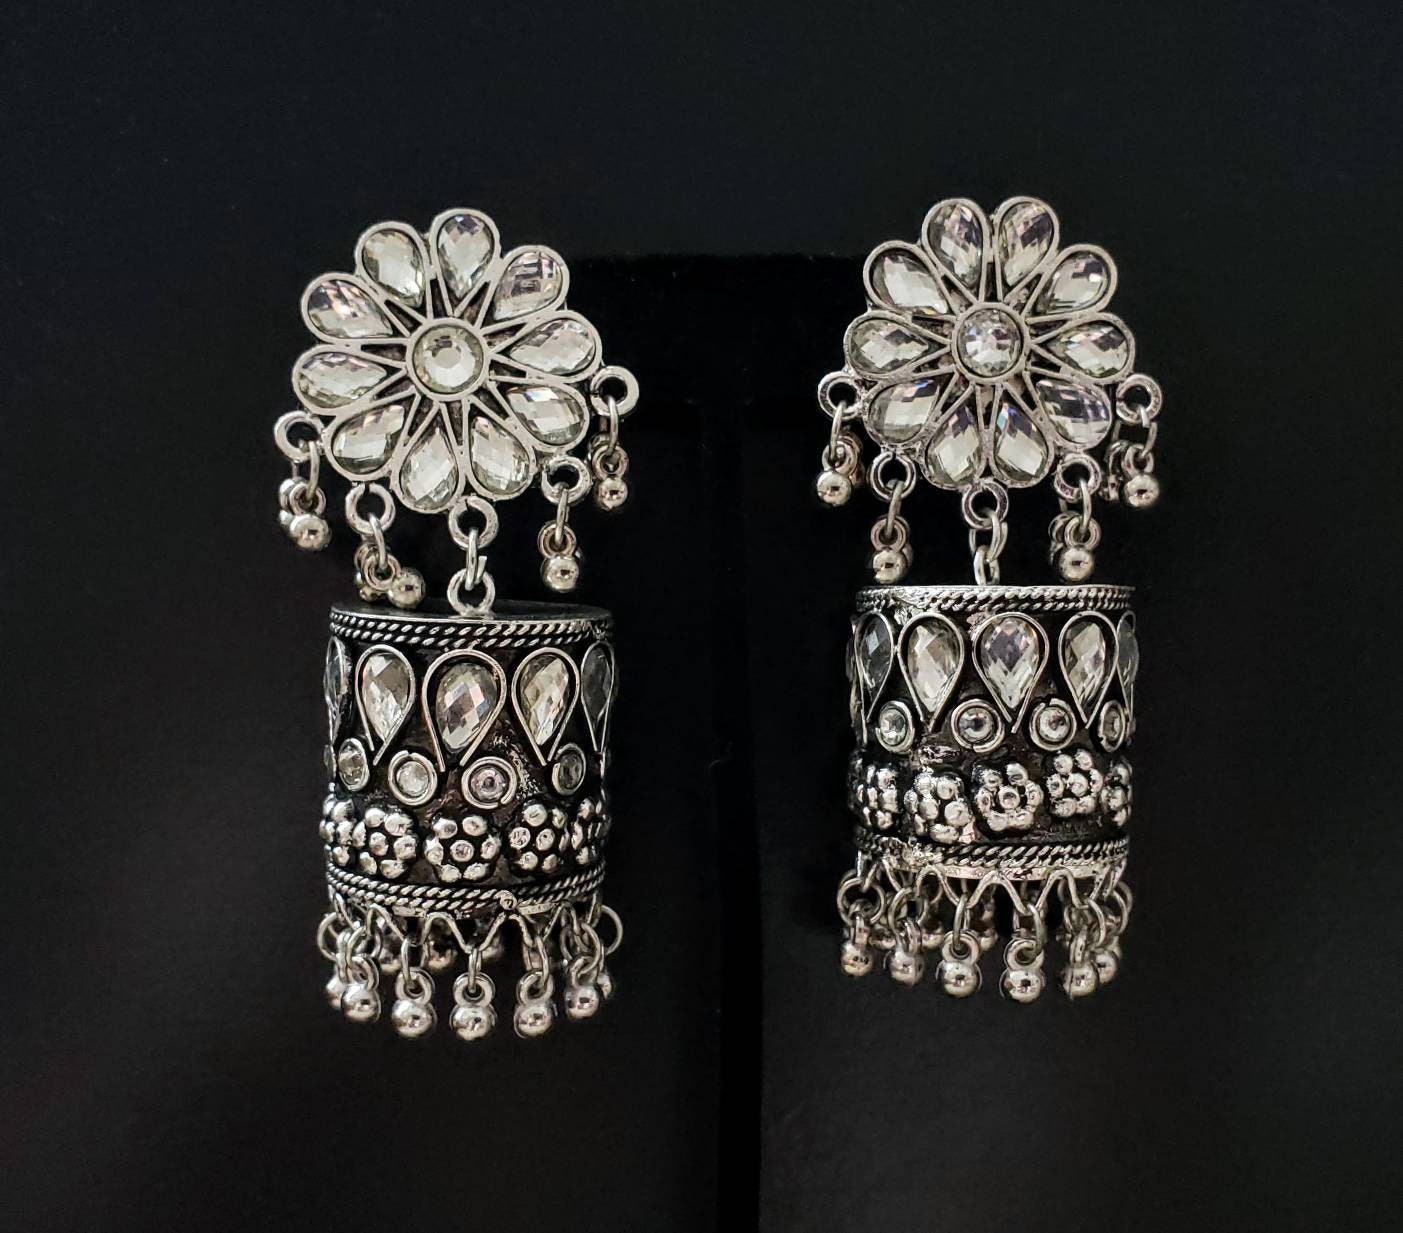 Afghani jewelry,Afghani earrings,oxidized silver Indian jewelry